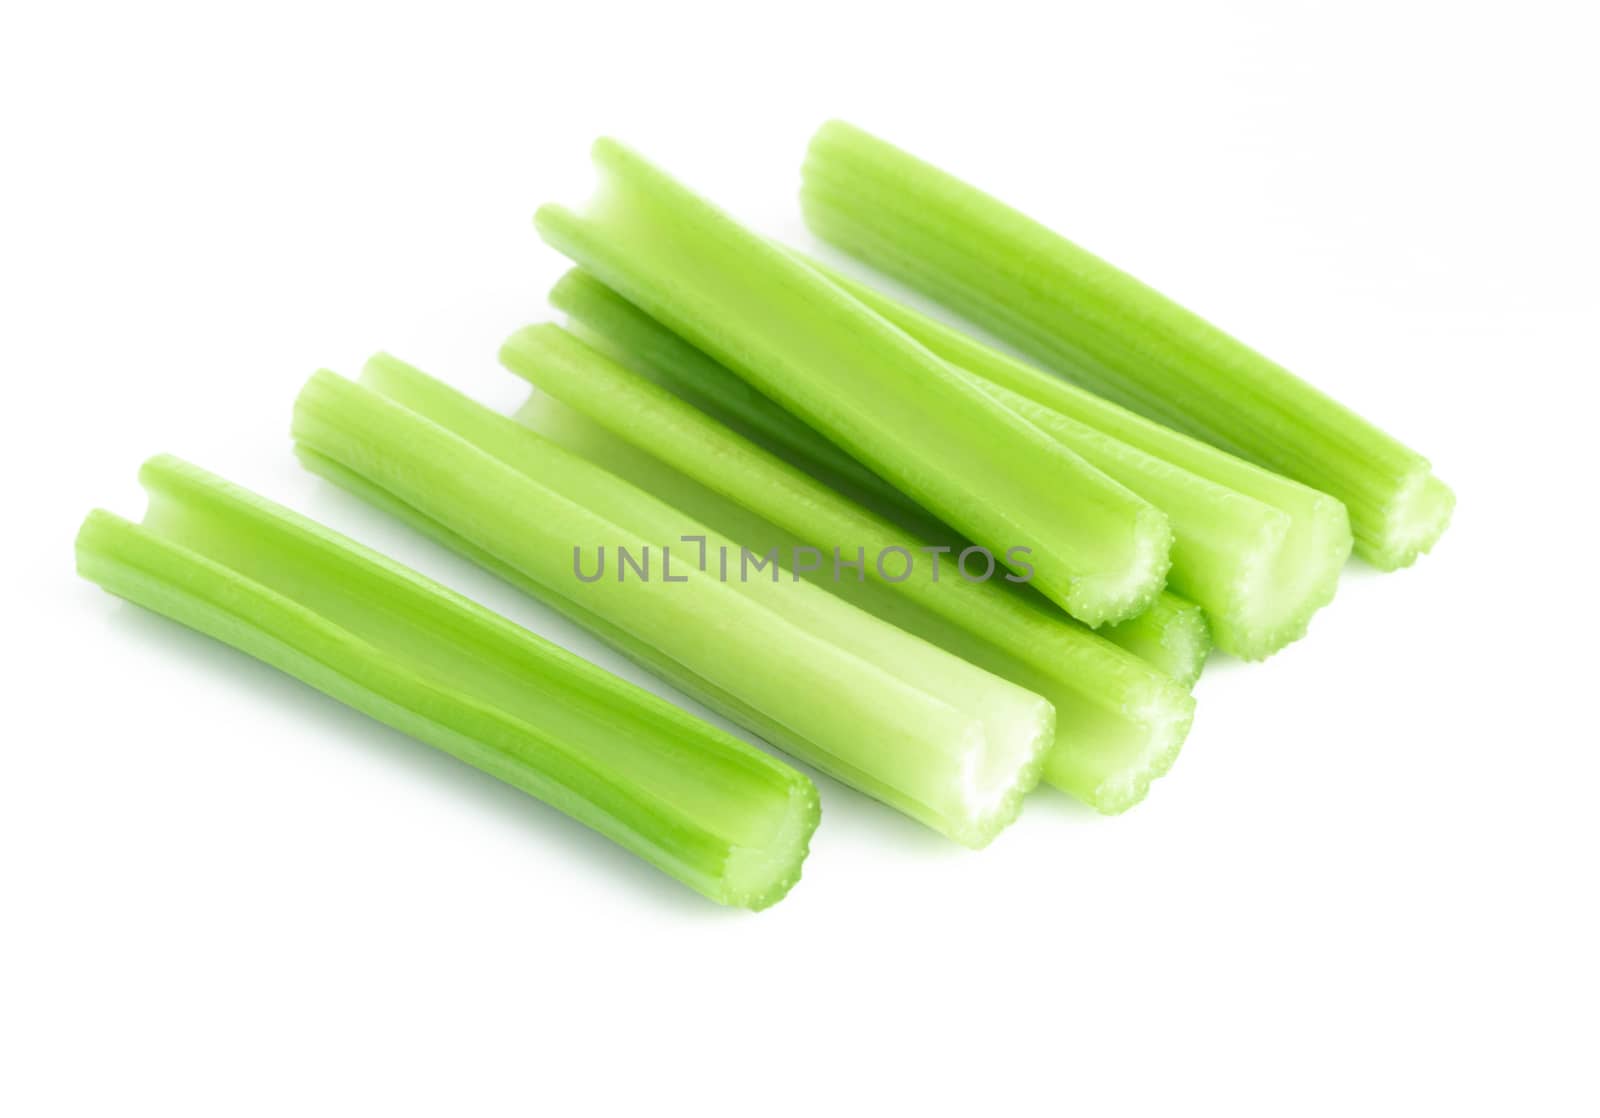 Fresh green celery leaves vegetable isolated on white background by pt.pongsak@gmail.com